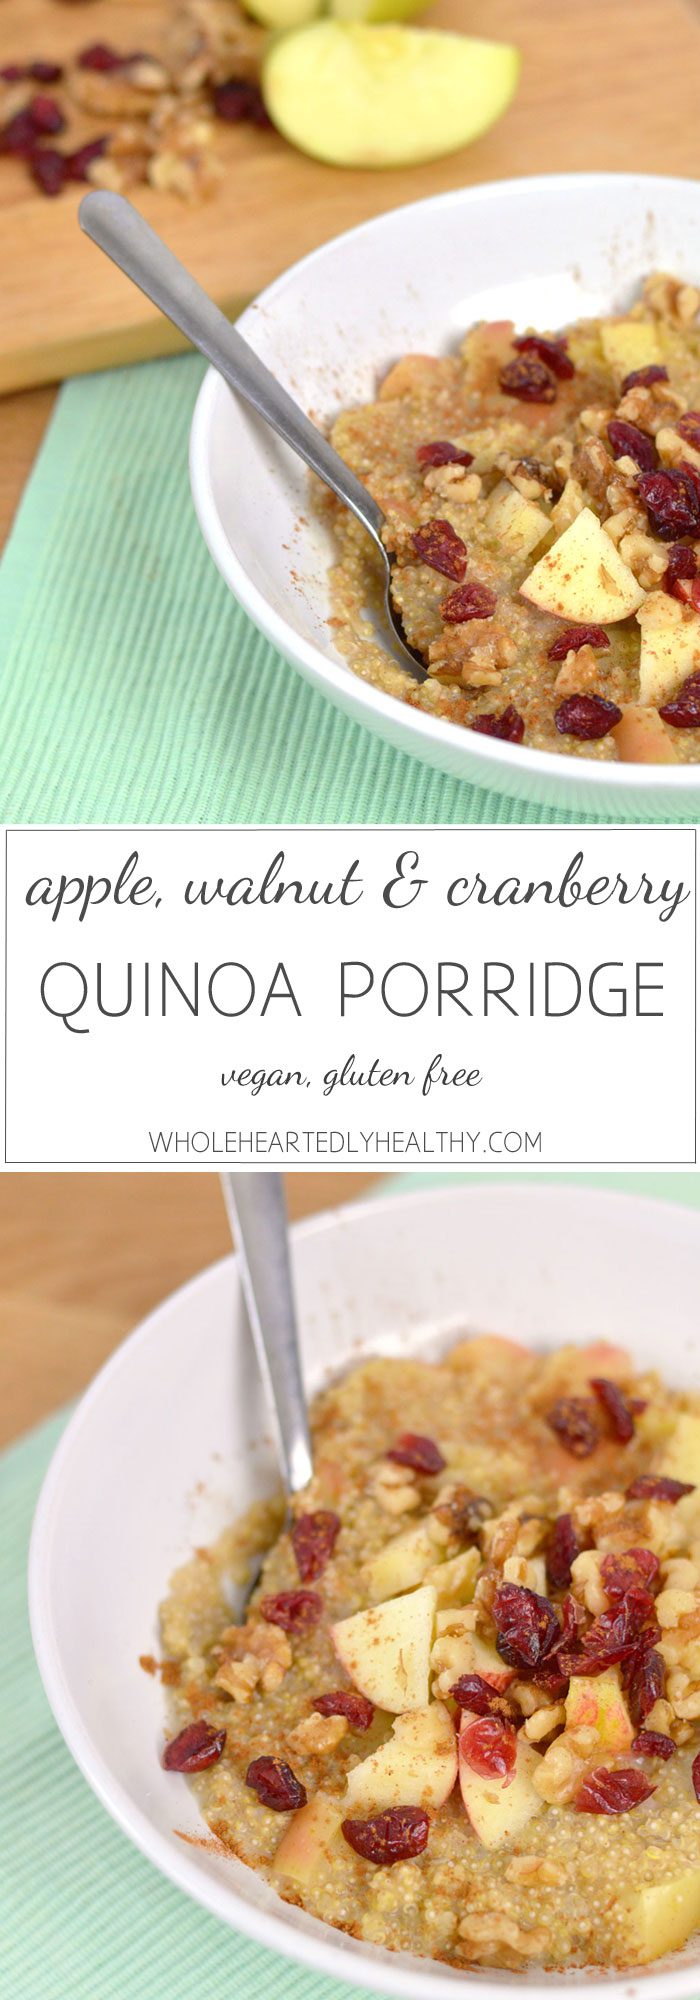 Apple walnut and cranberry quinoa porridge